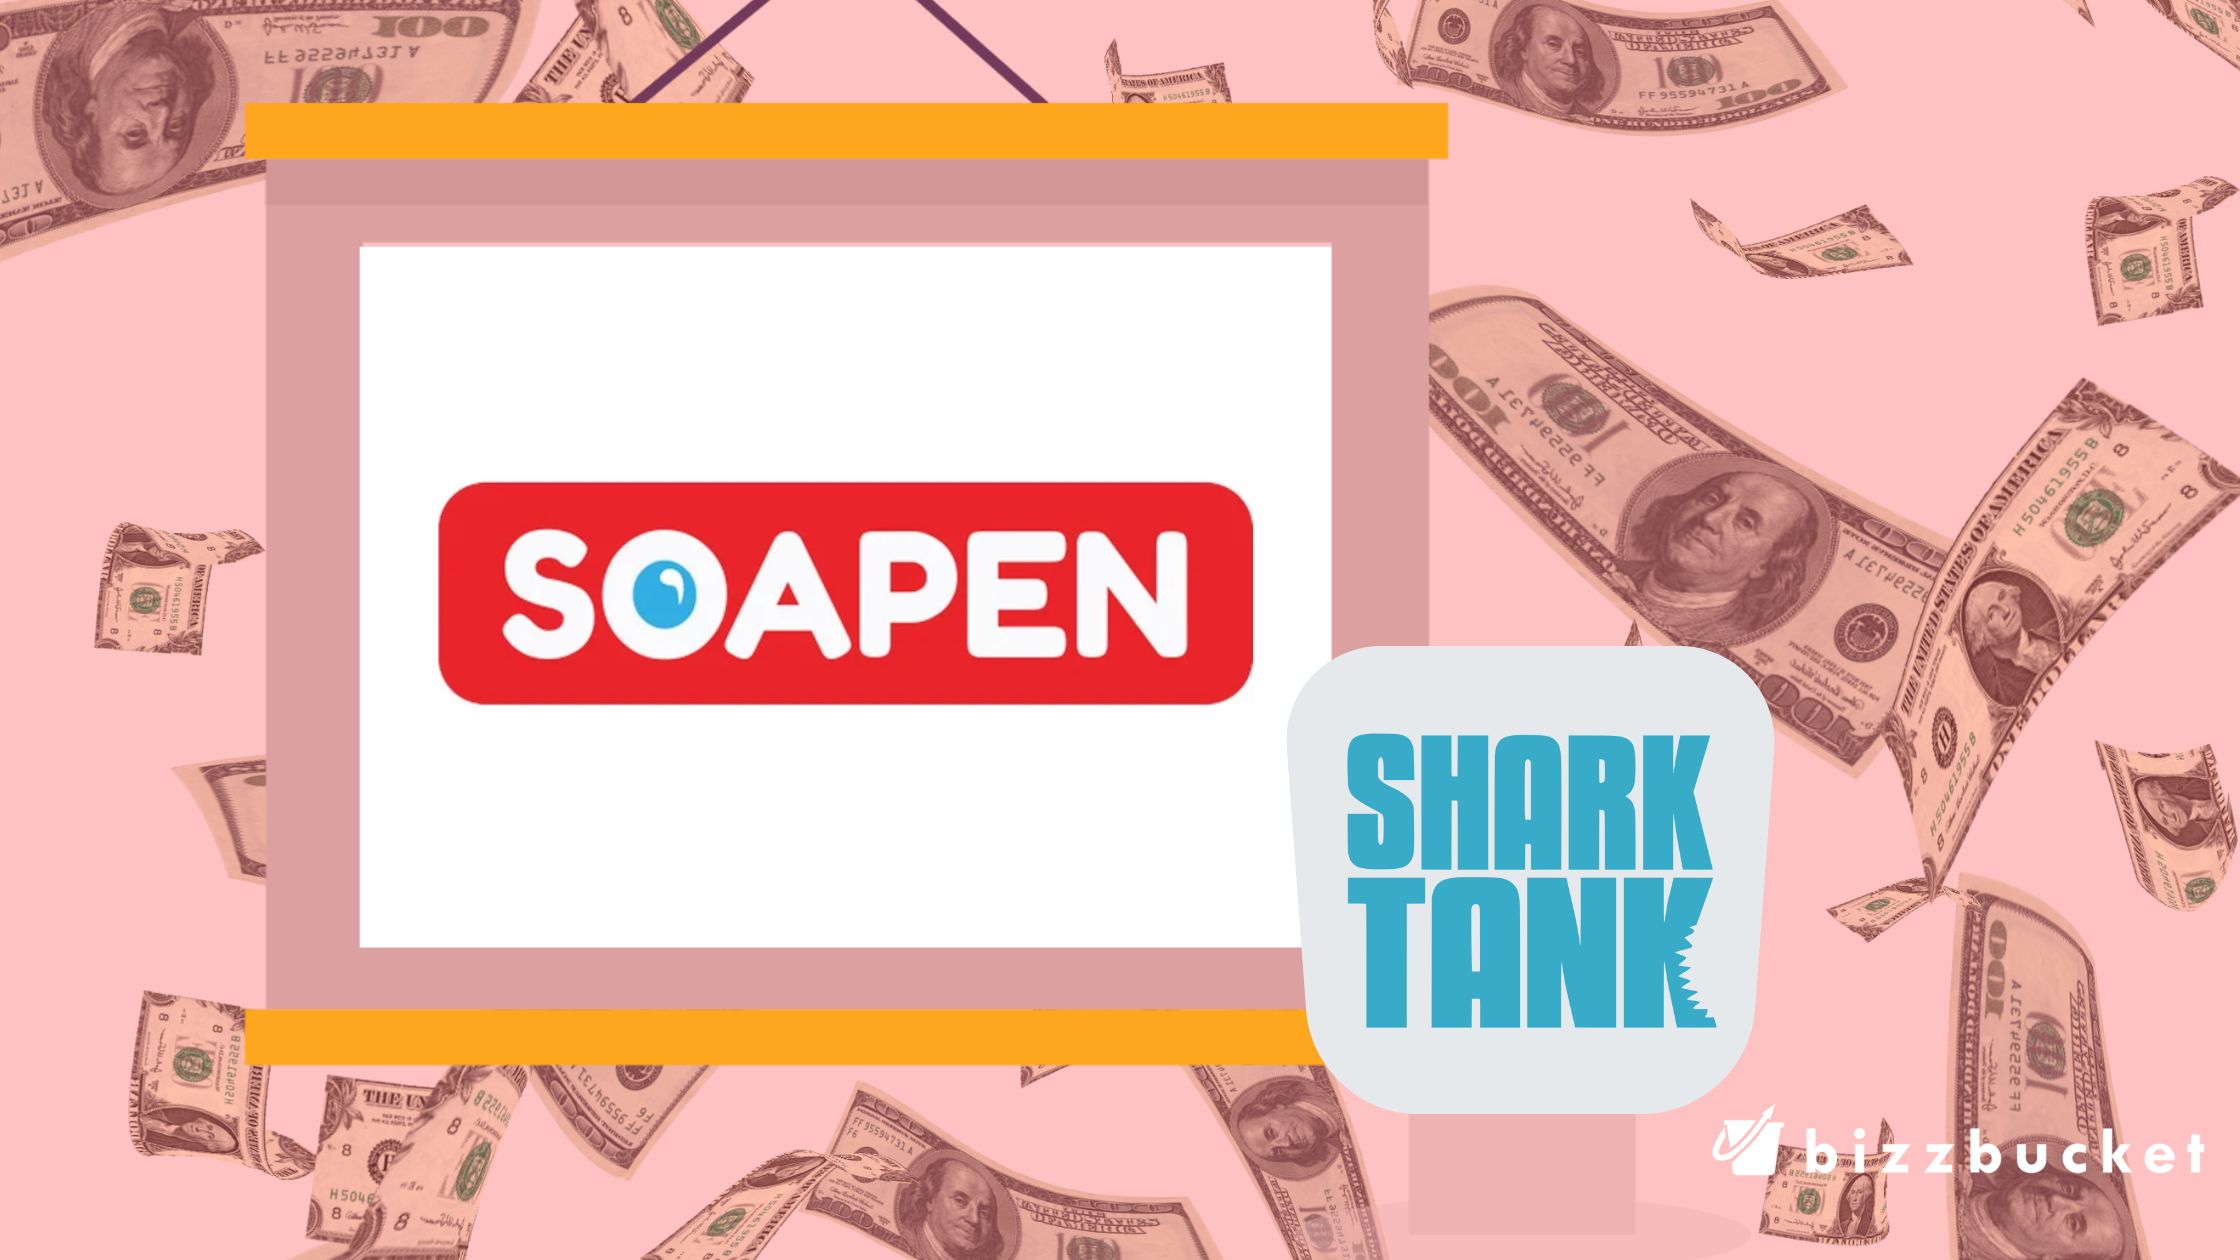 SoaPen shark tank update